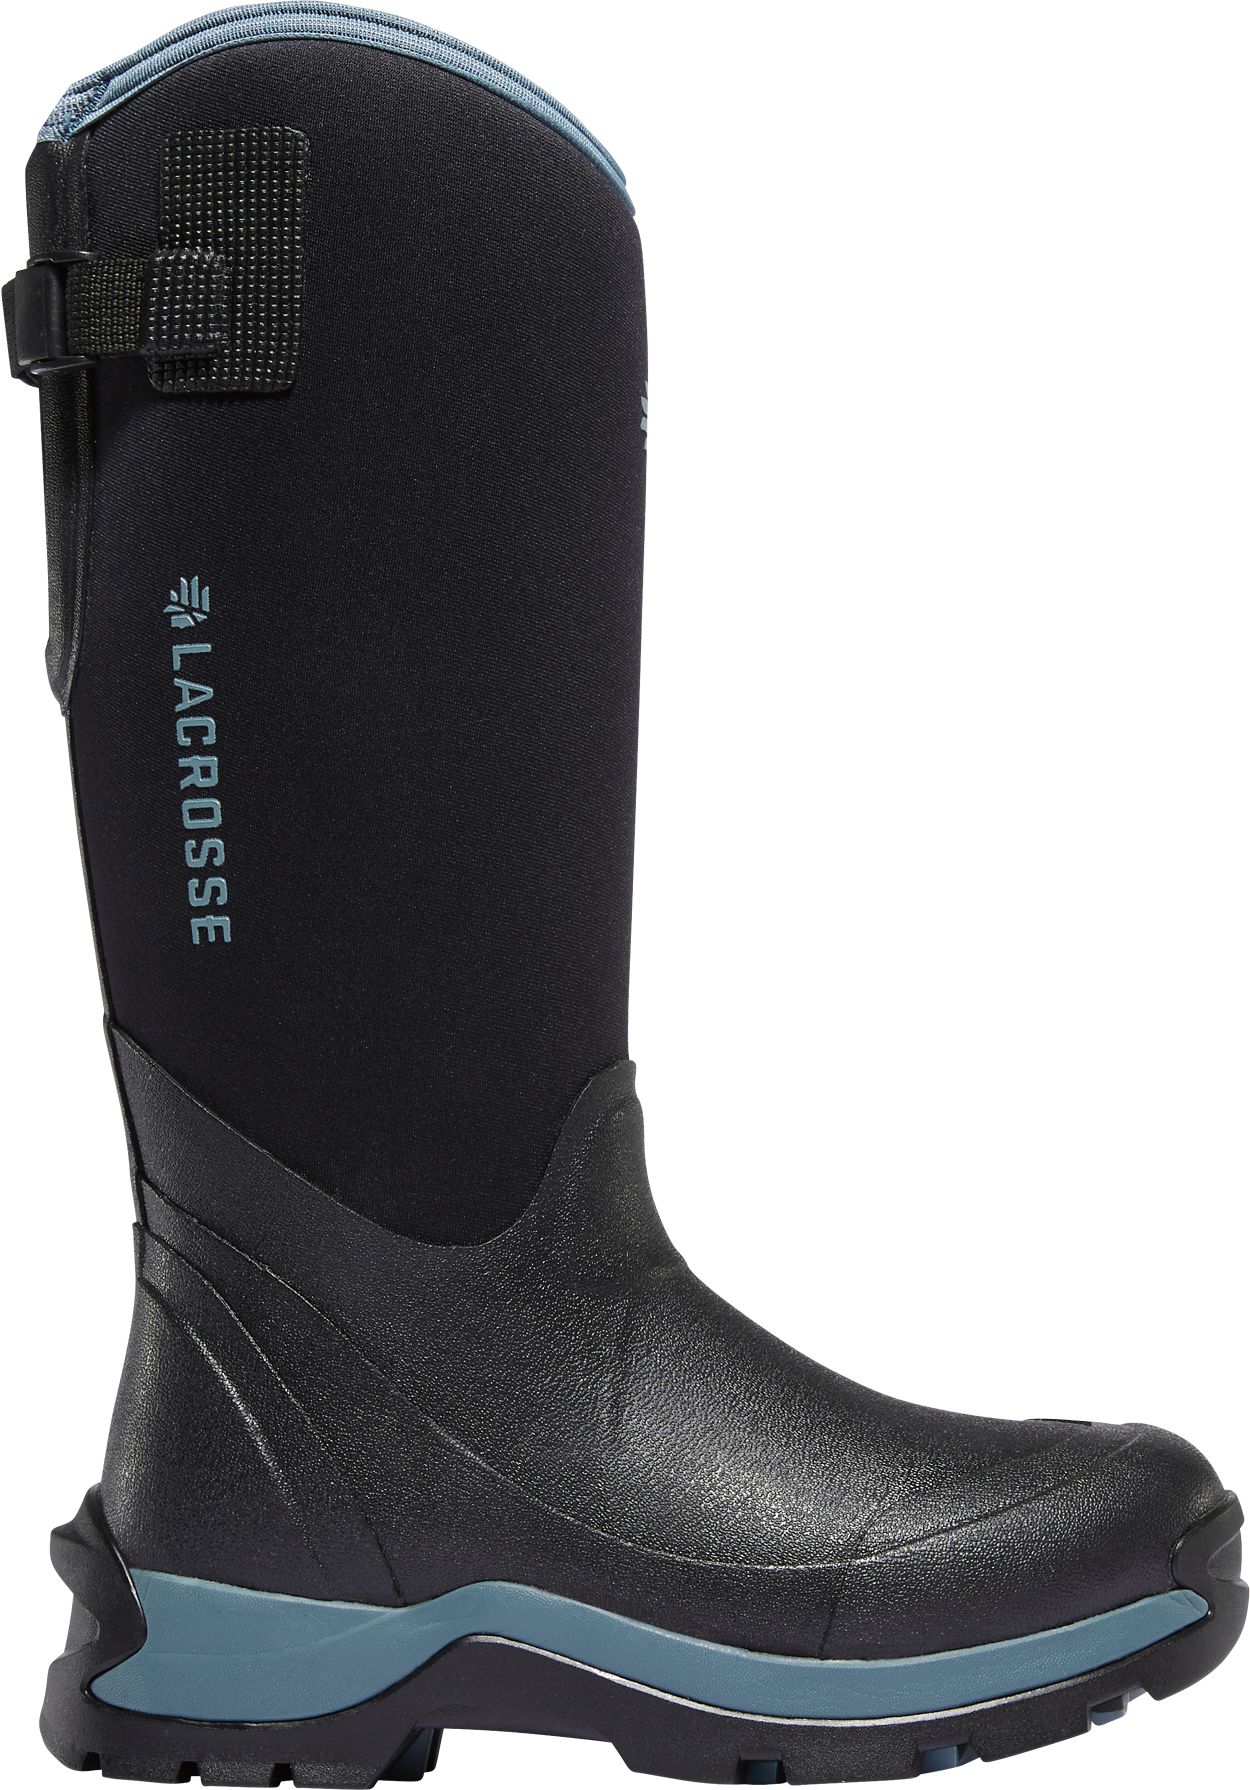 thermal waterproof boots women's